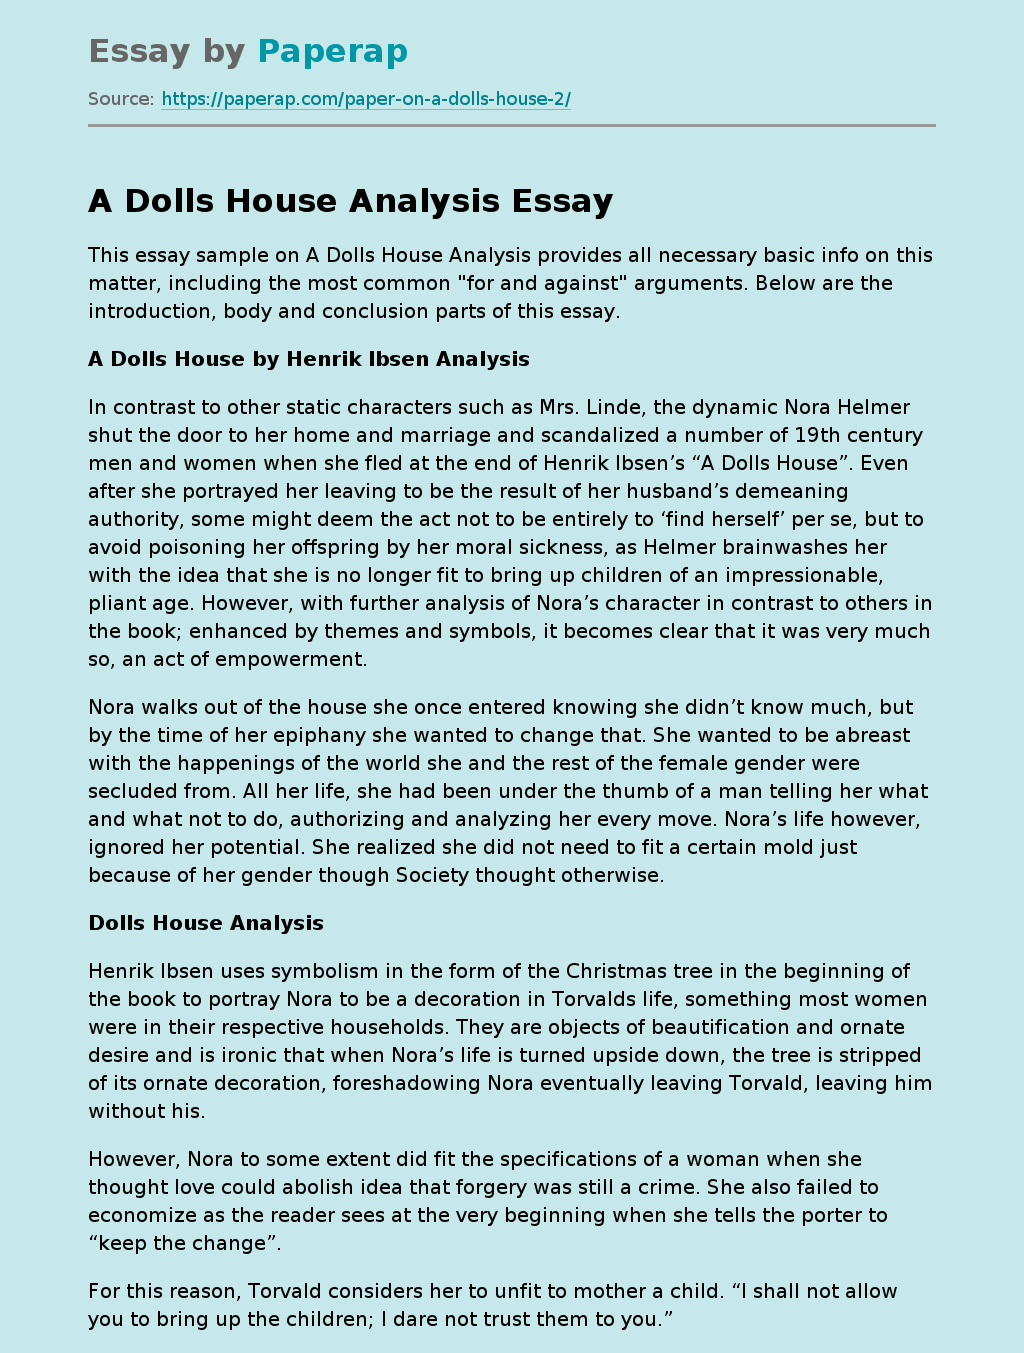 A Dolls House Analysis